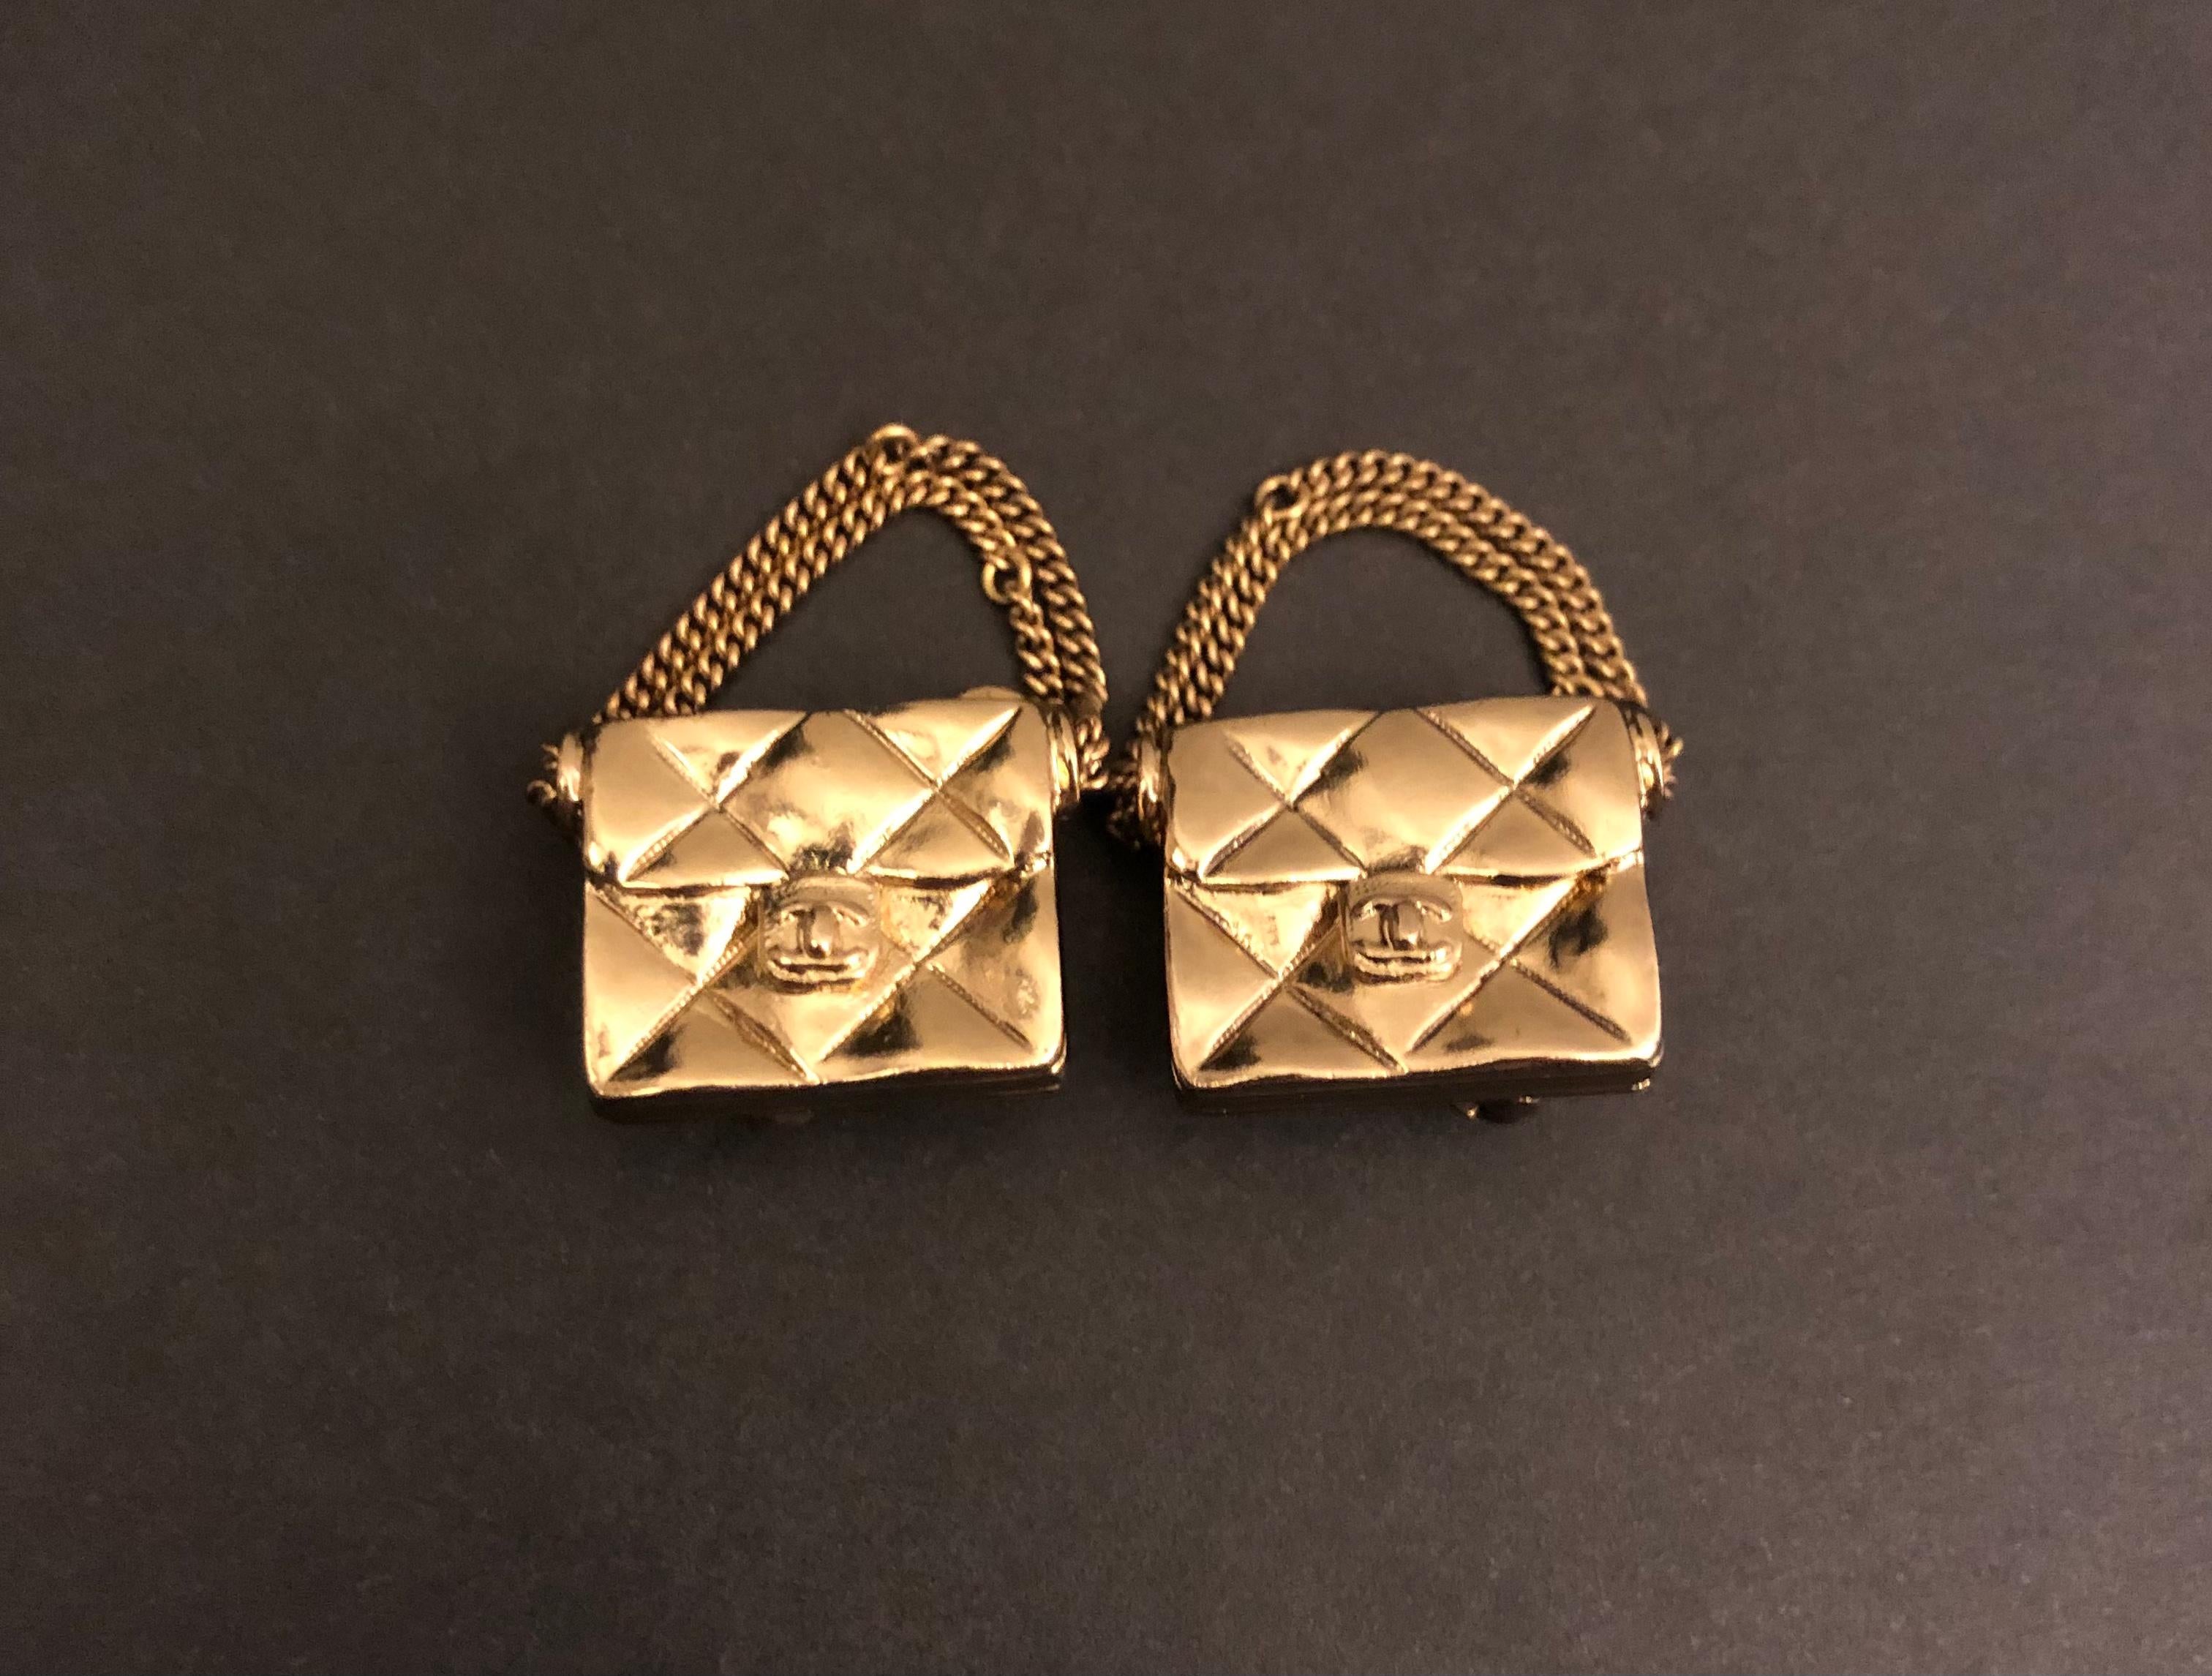 chanel bag earrings